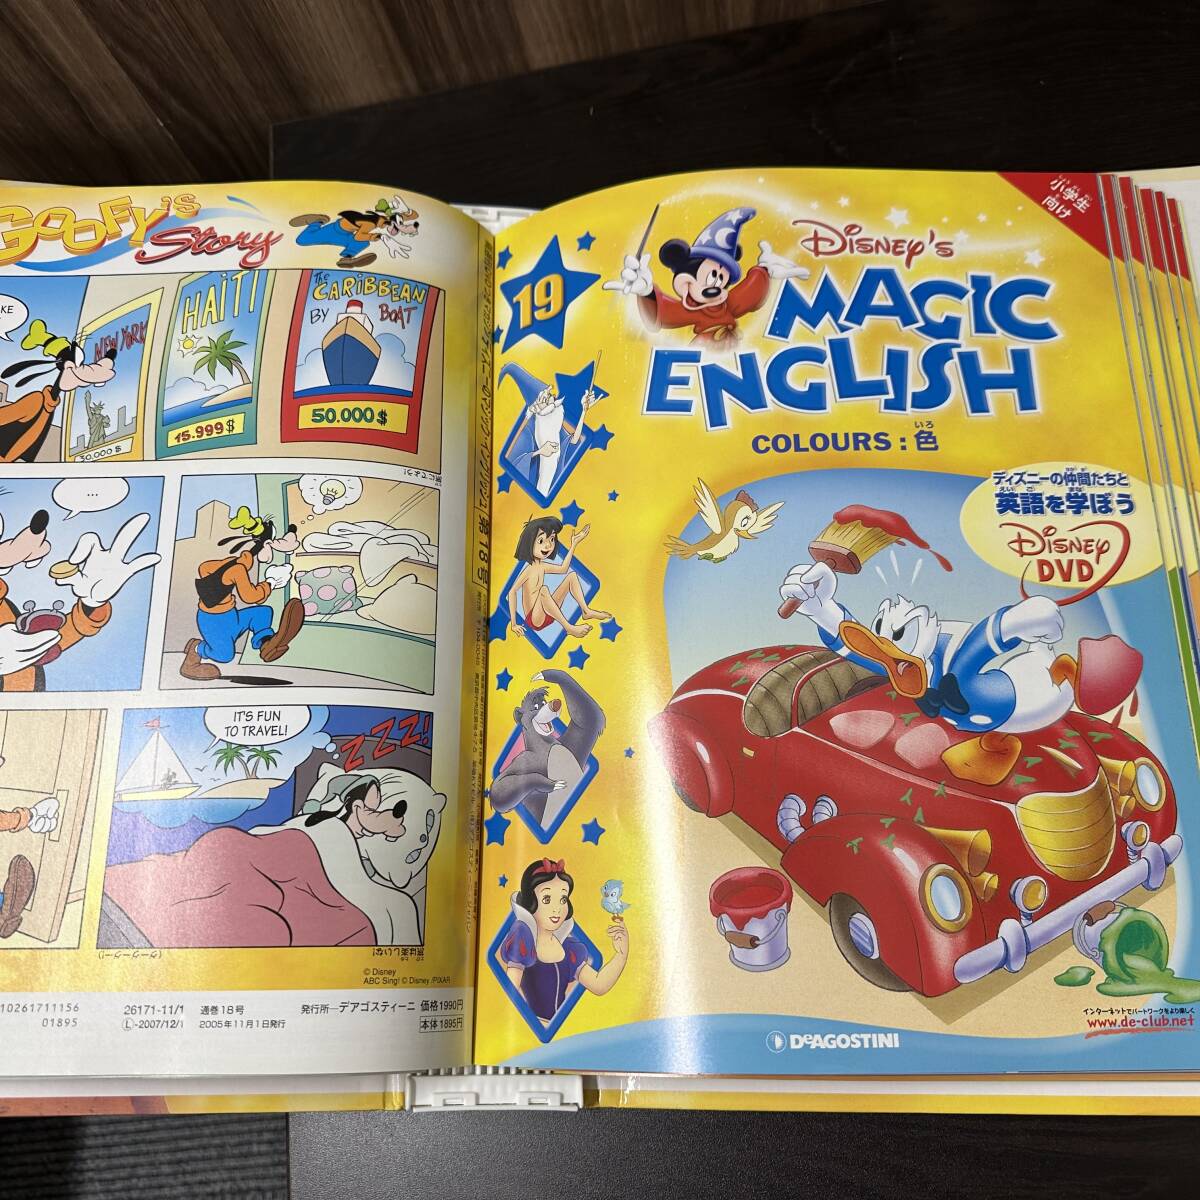  Disney MAGICENGLISH DVD26 pcs set child education English teaching material Magic wing lishuDISNEY elementary school student ..1 jpy exhibition textbook attaching 